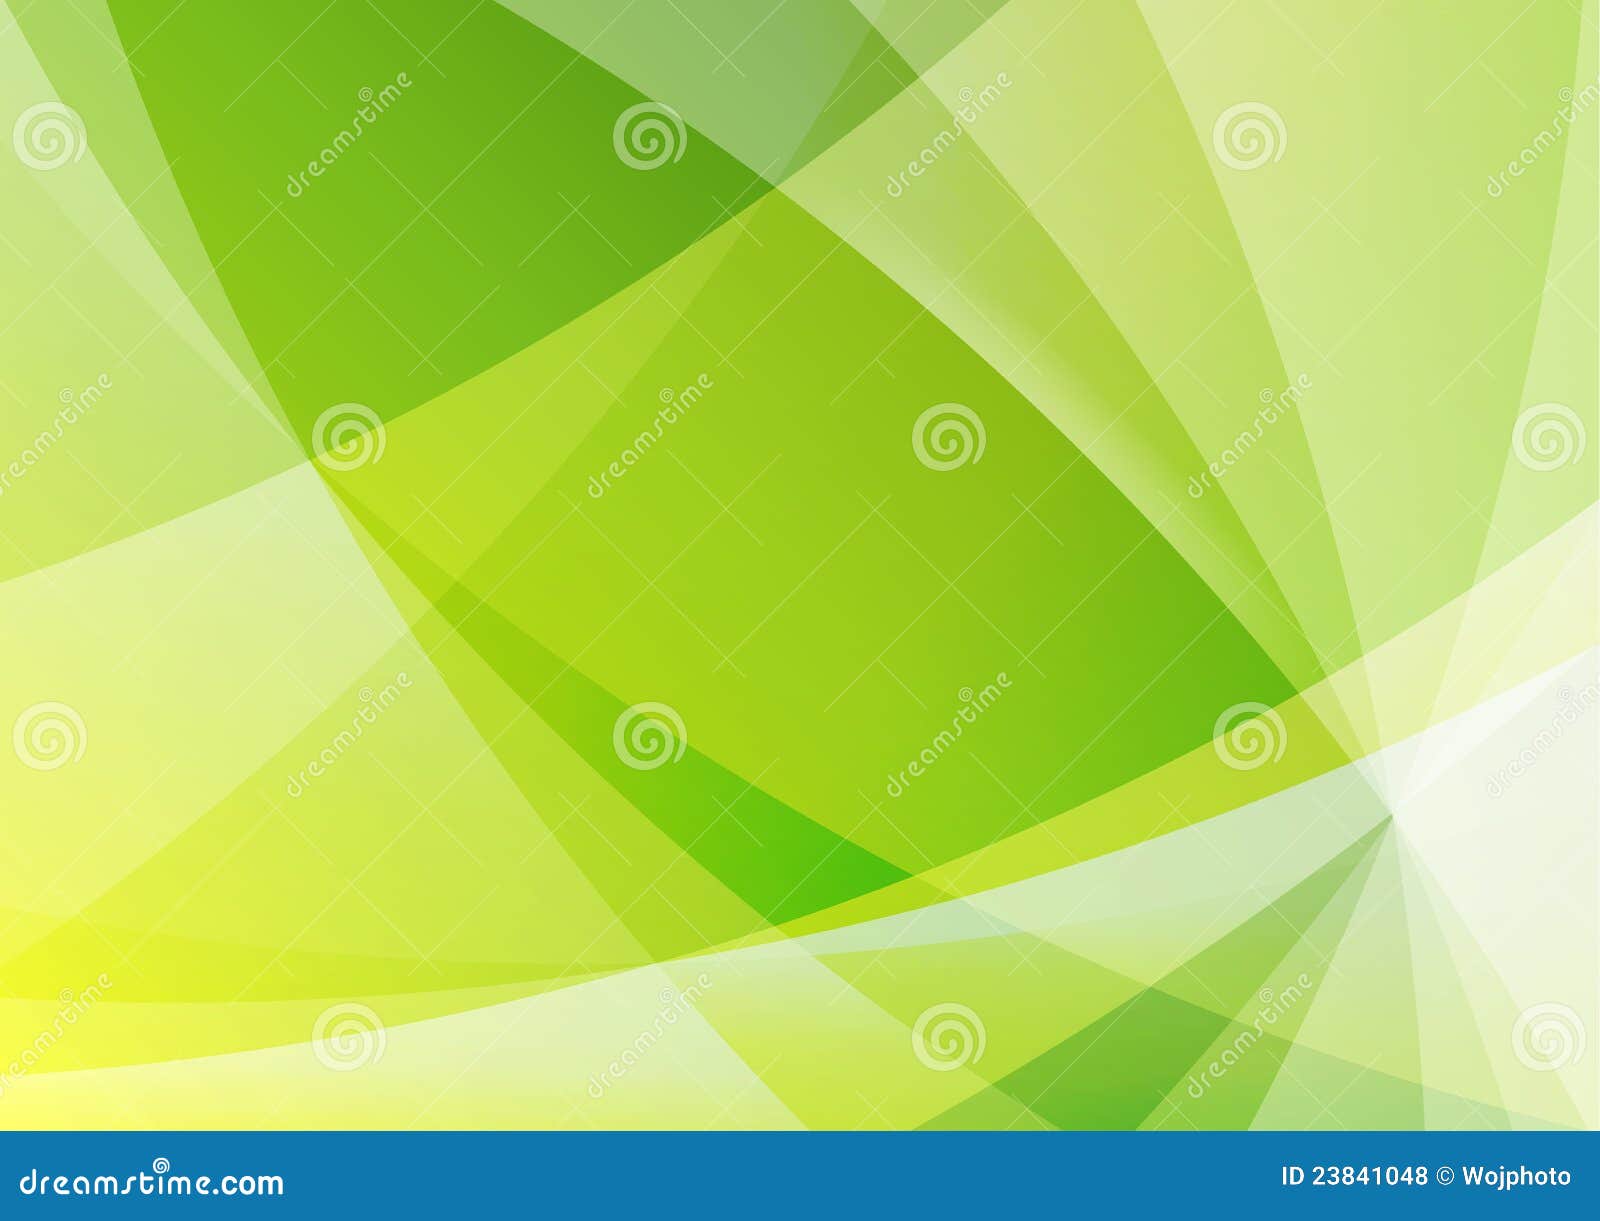 Abstract Green Background Wallpaper Illustration 23841048 - Megapixl